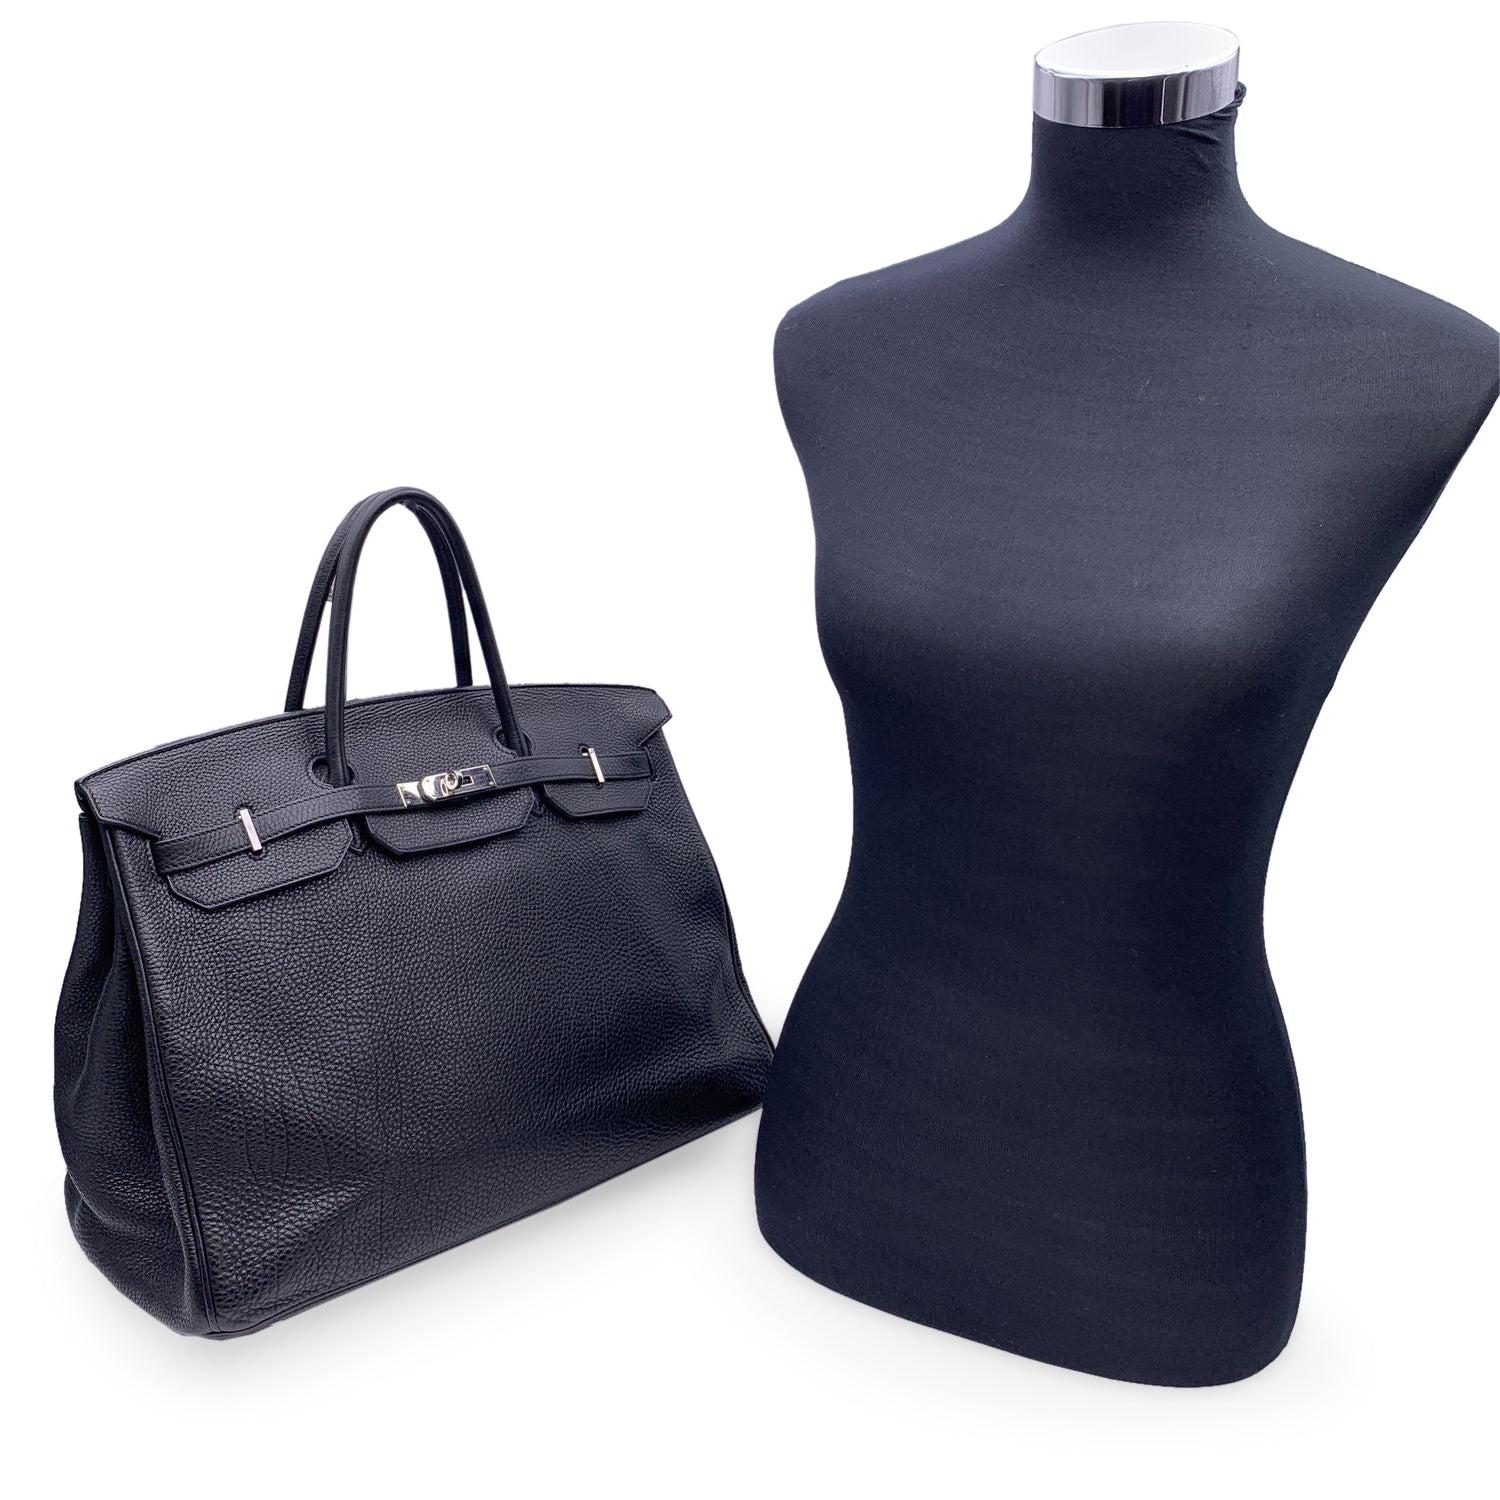 Hermes Black Togo Leather Birkin 40 Top Handle Bag Satchel Handbag 4